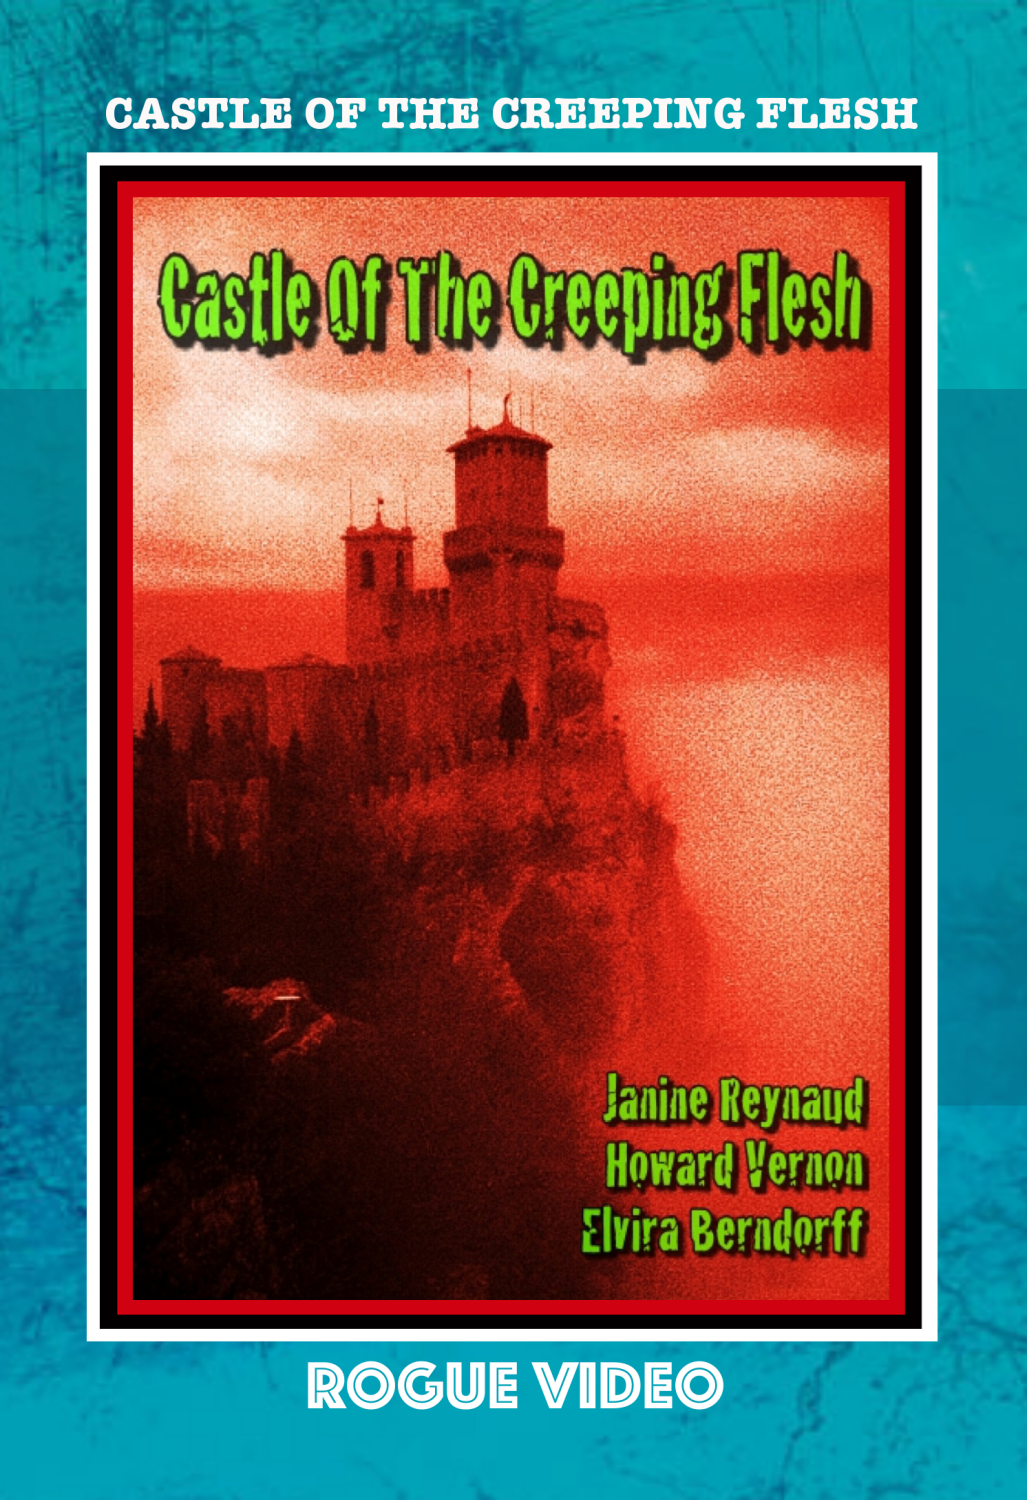 ROGUE VIDEO - rare horror DVDs - cult films & fiction "CASTLE OF THE CREEPING FLESH" (1968)